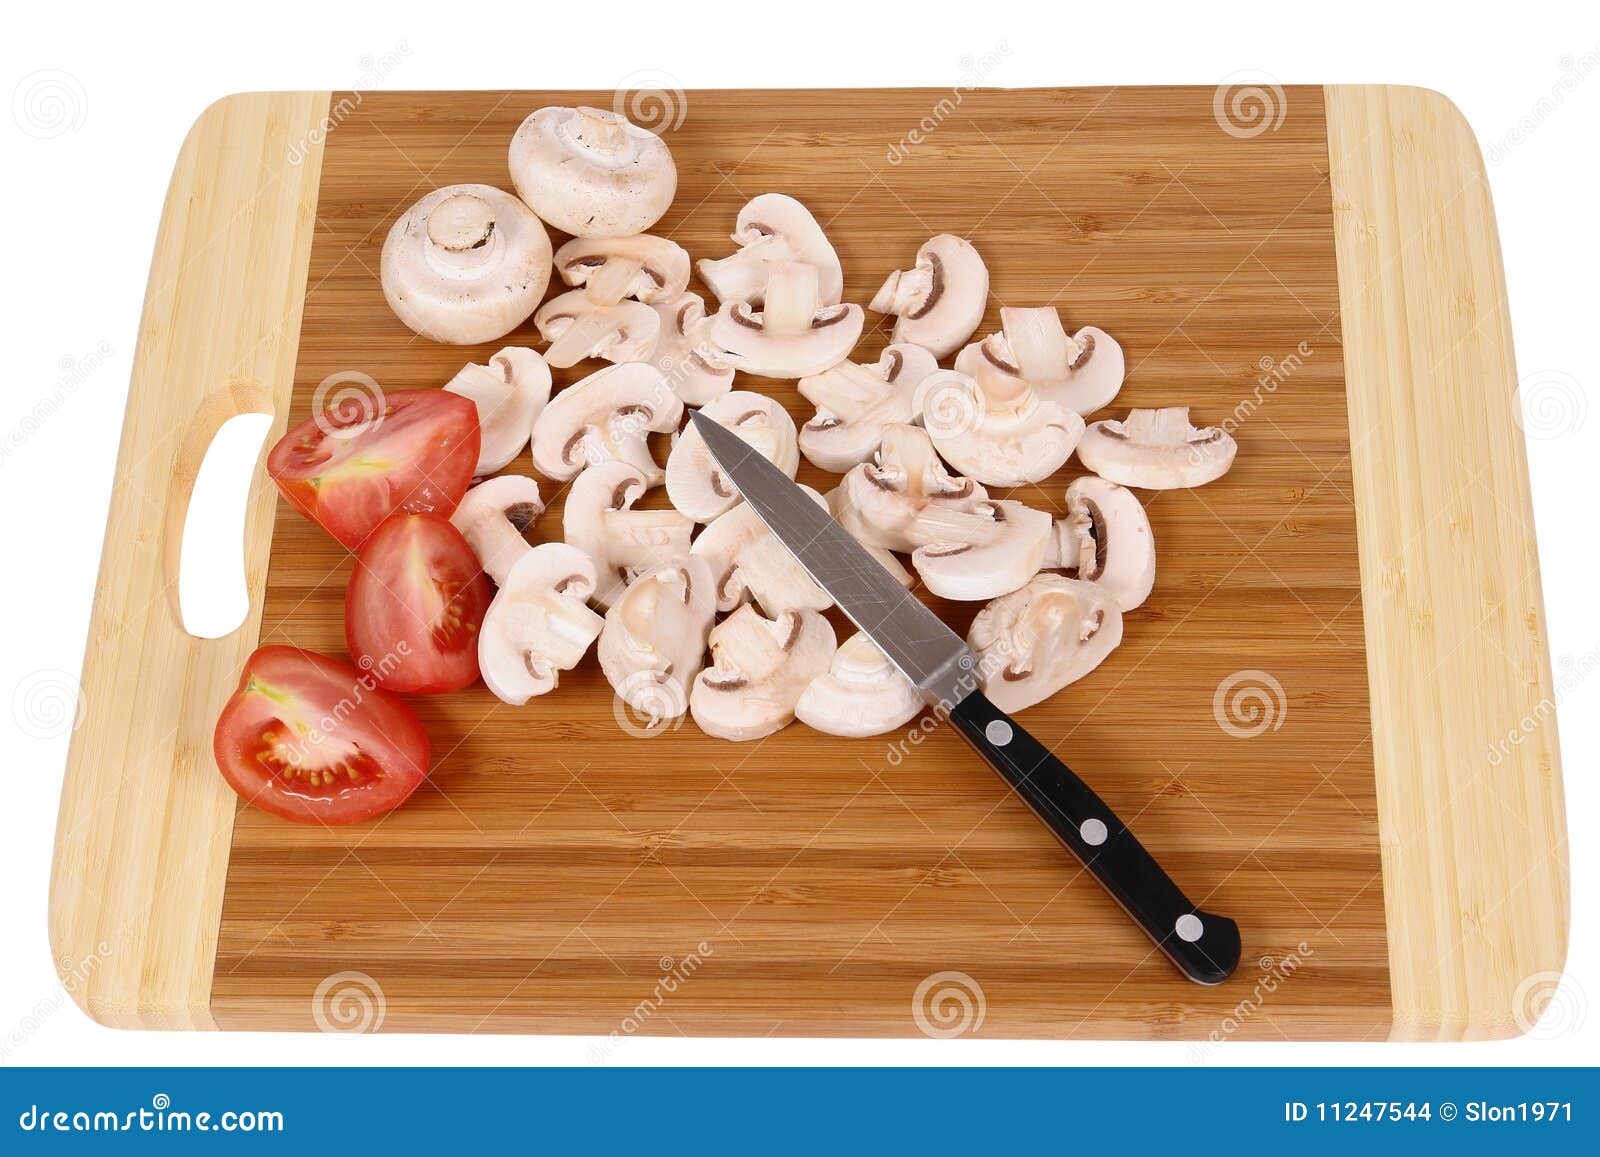 Mushrooms to cut on brown chopping board.